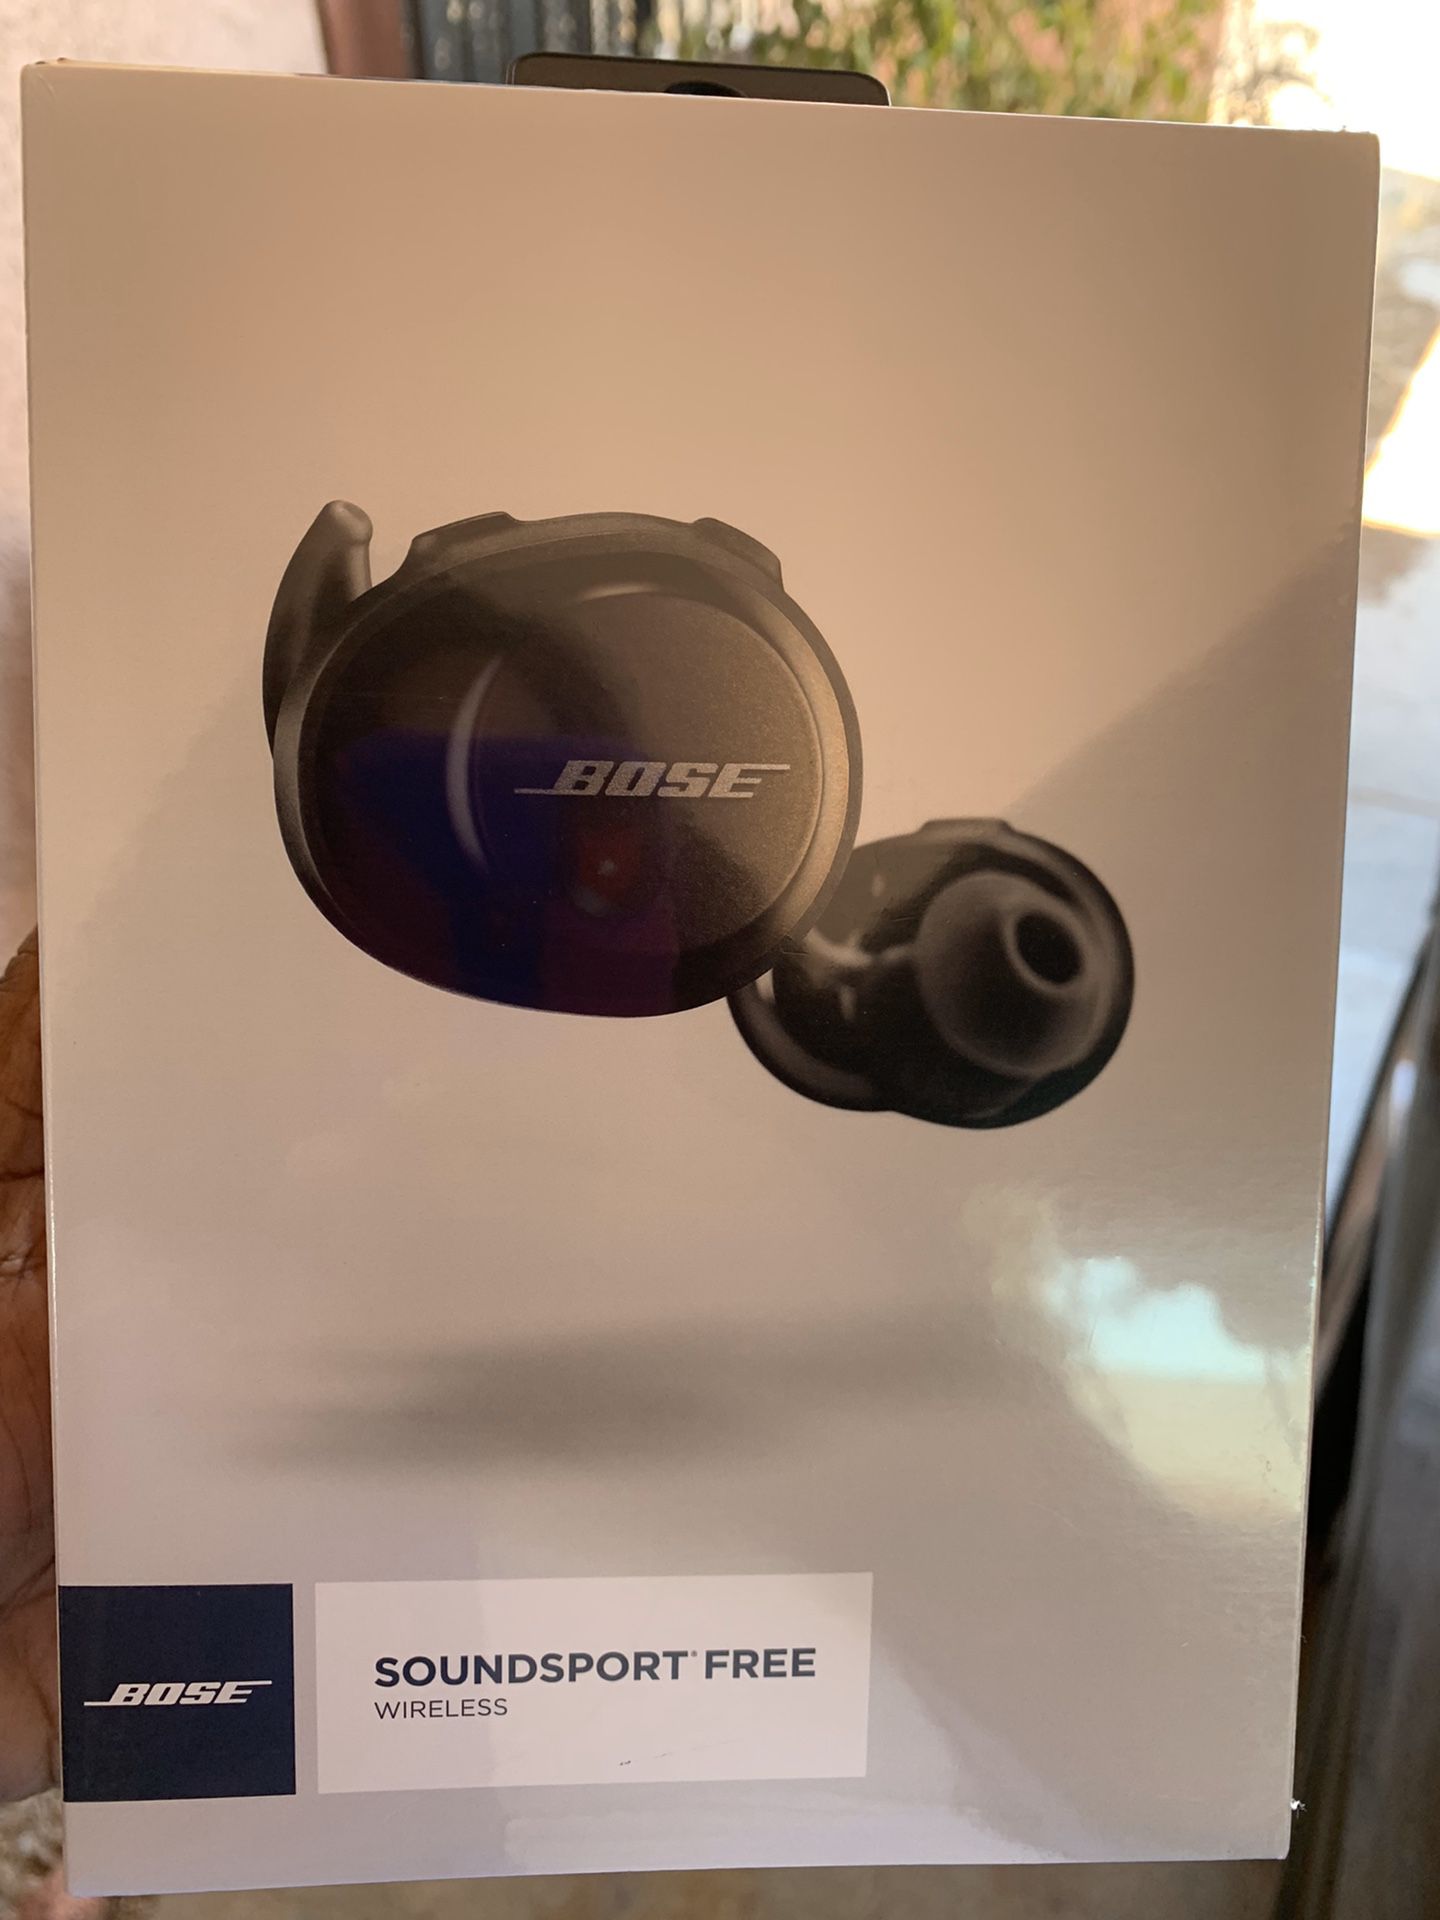 Brand new Bose sound sport free wireless headphones